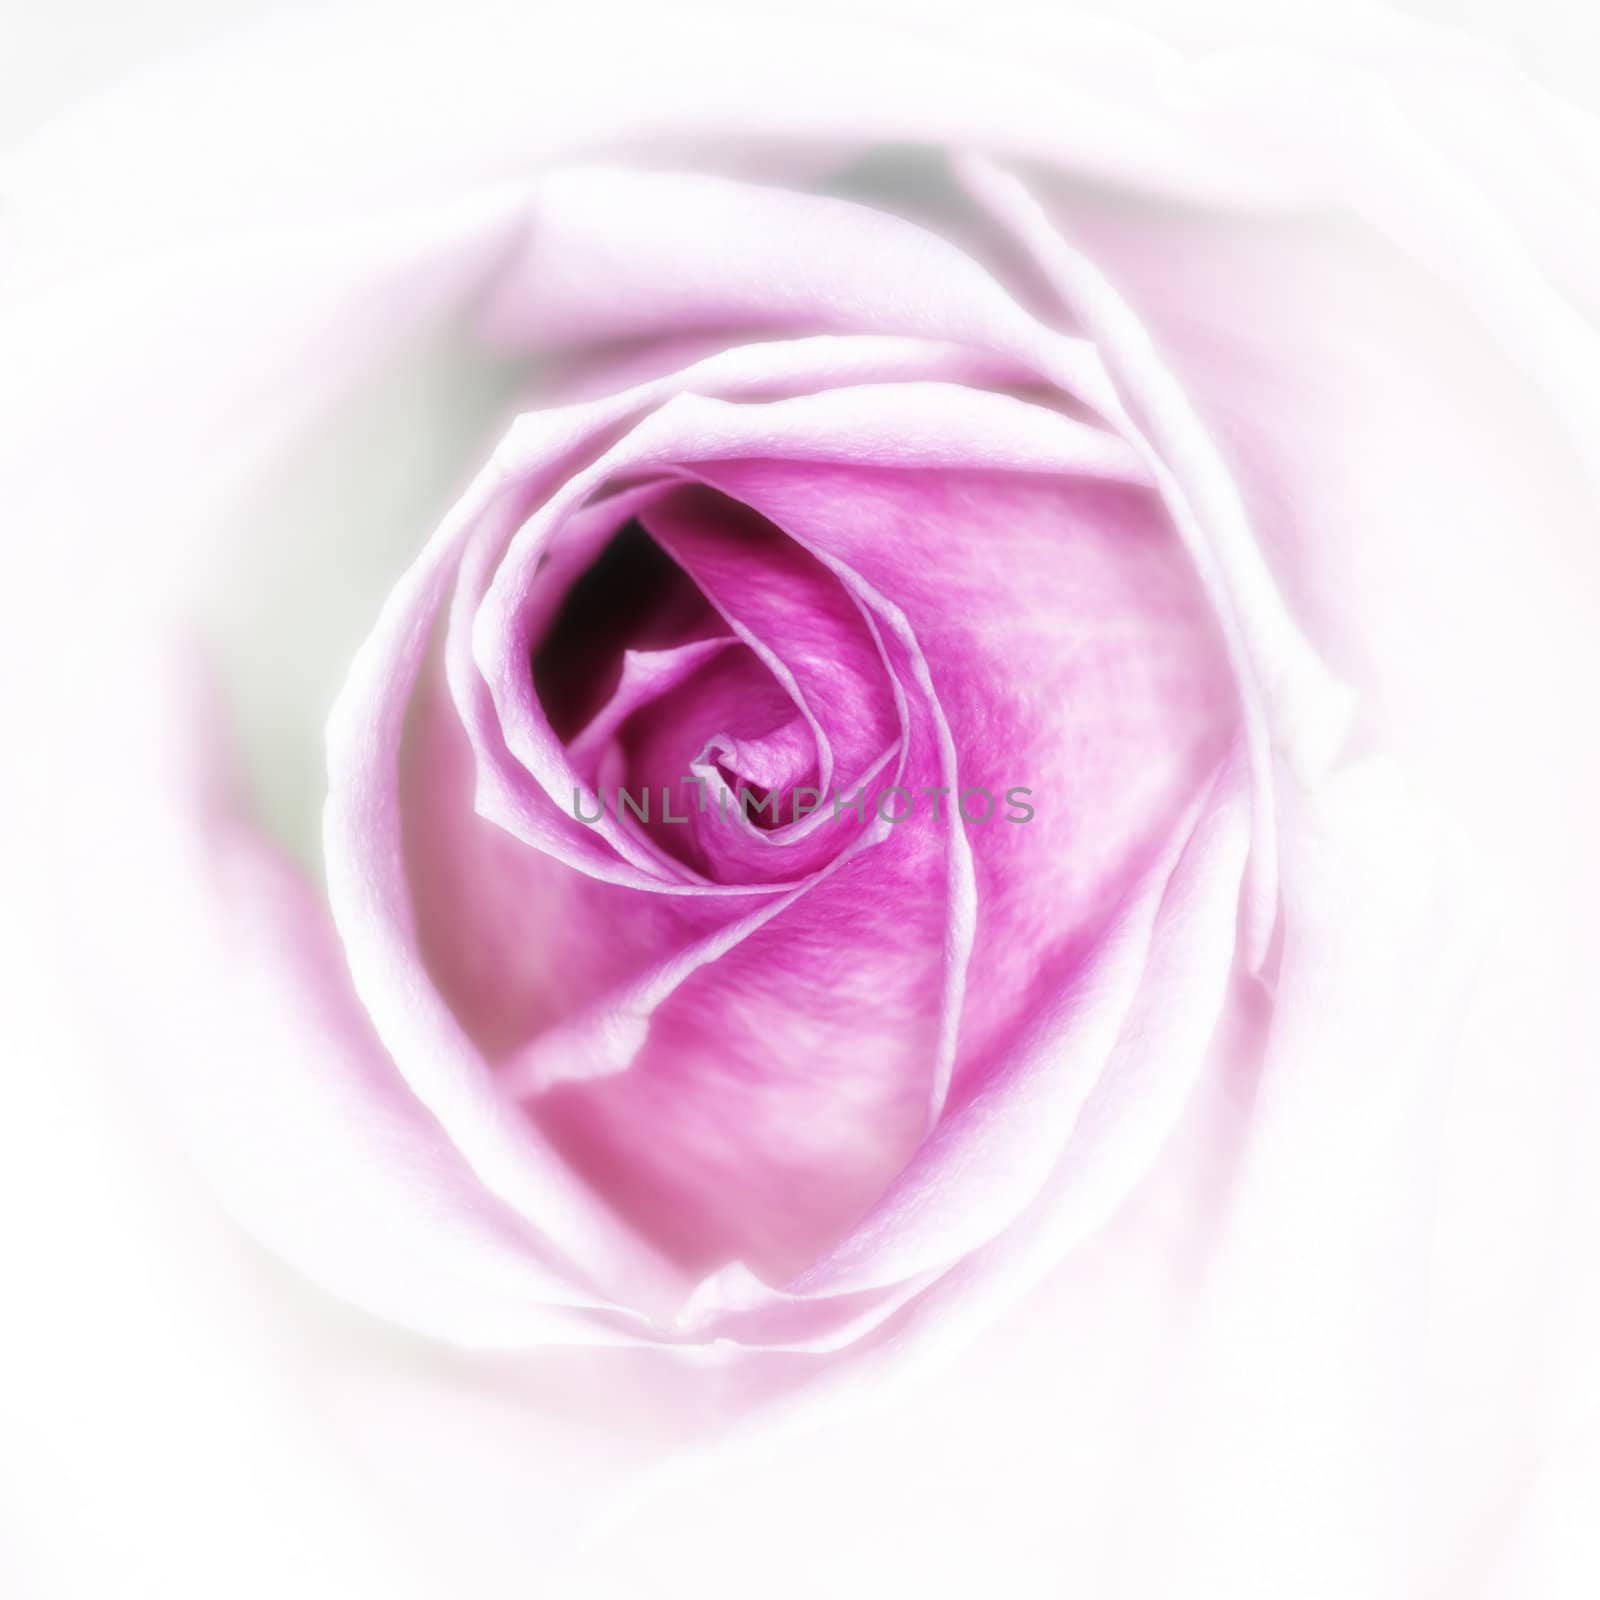 pink rose close up glamour